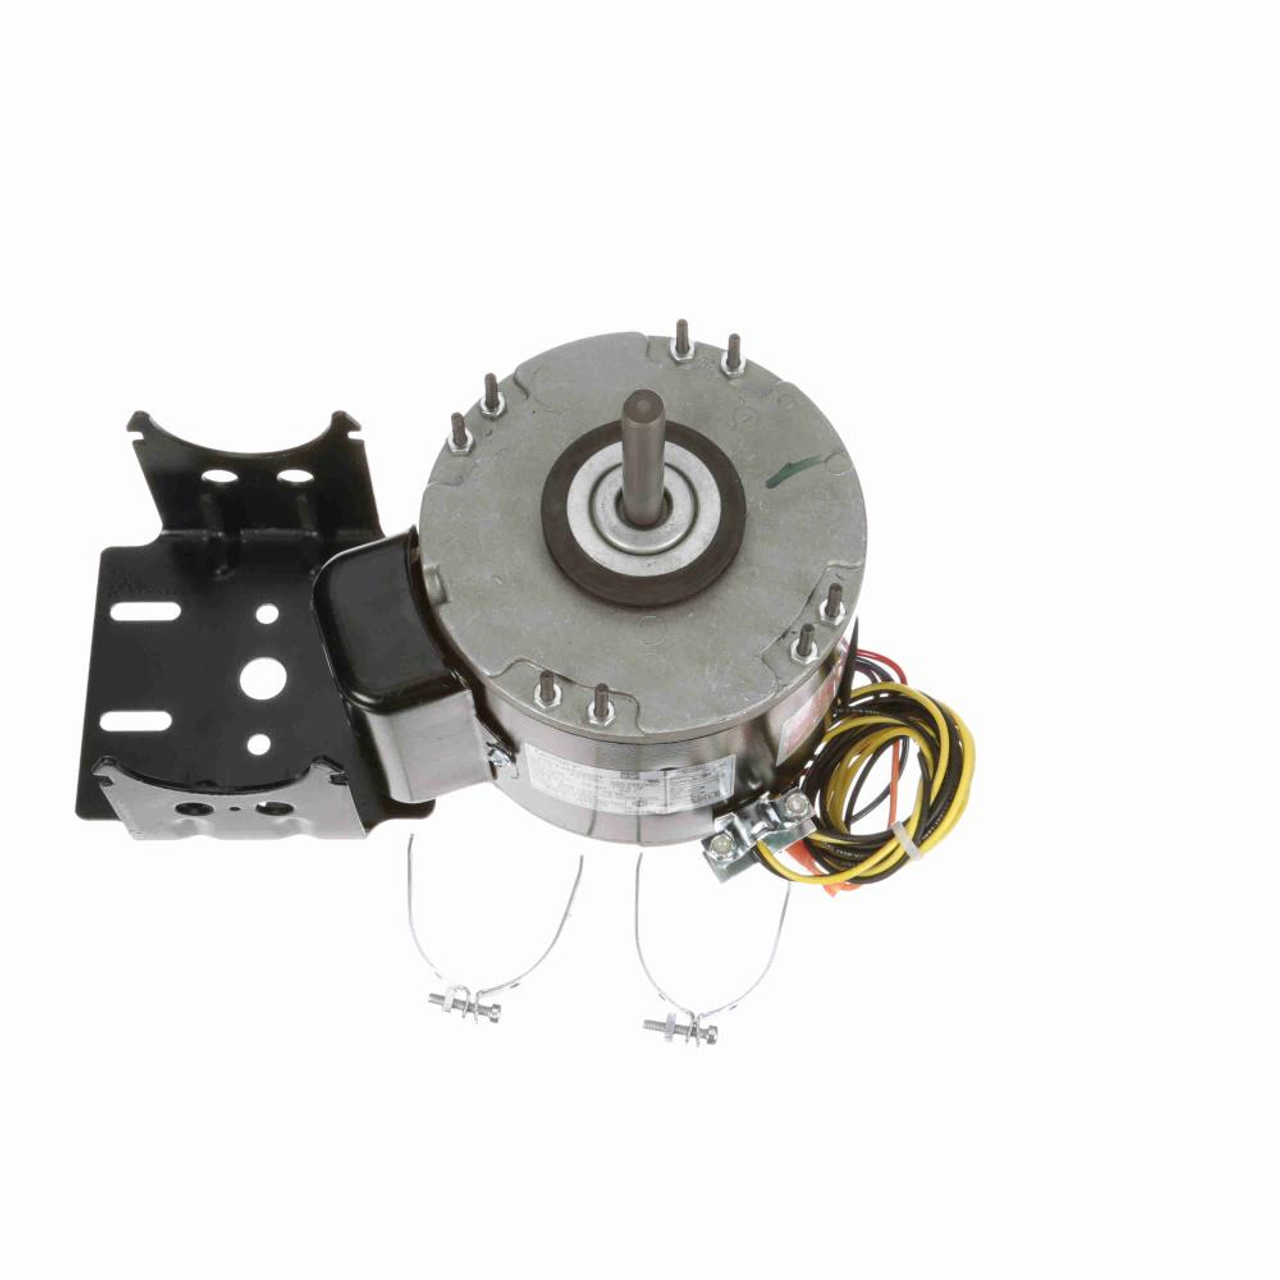 US1016 5-5/8" Totally Enclosed Fan/Blower Motor 1/6 HP